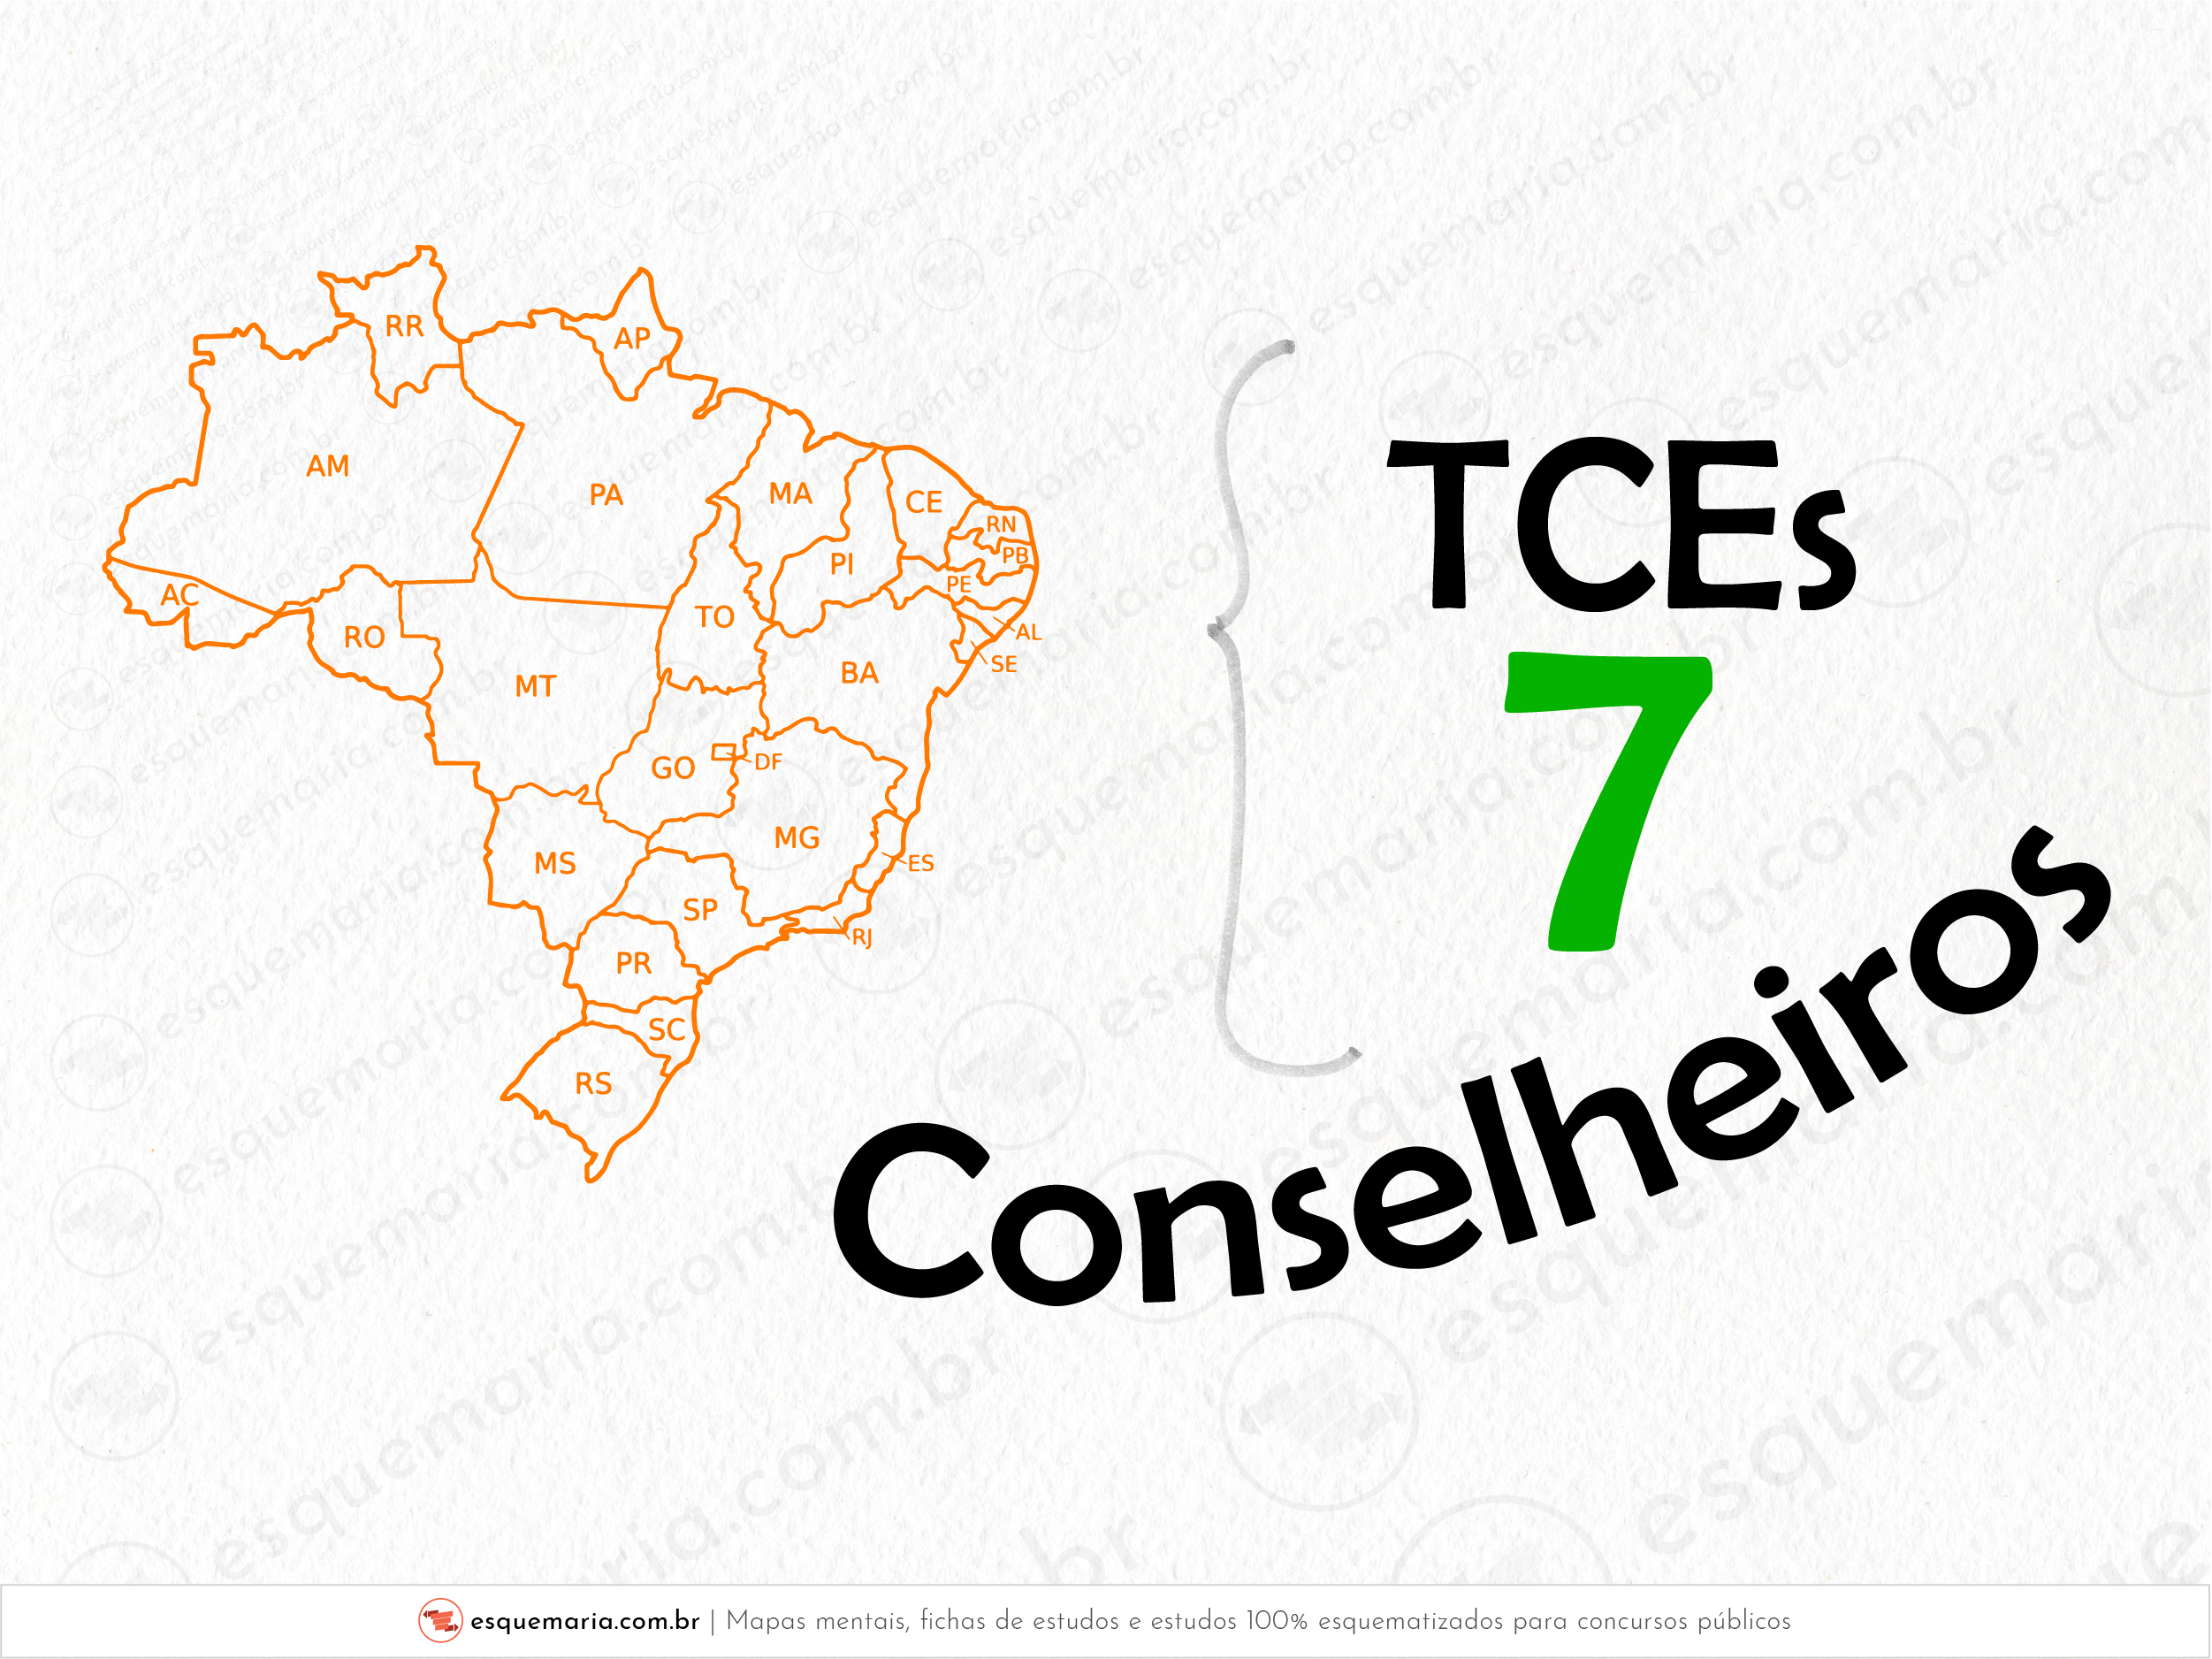 TCEs 7 conselheiros-01